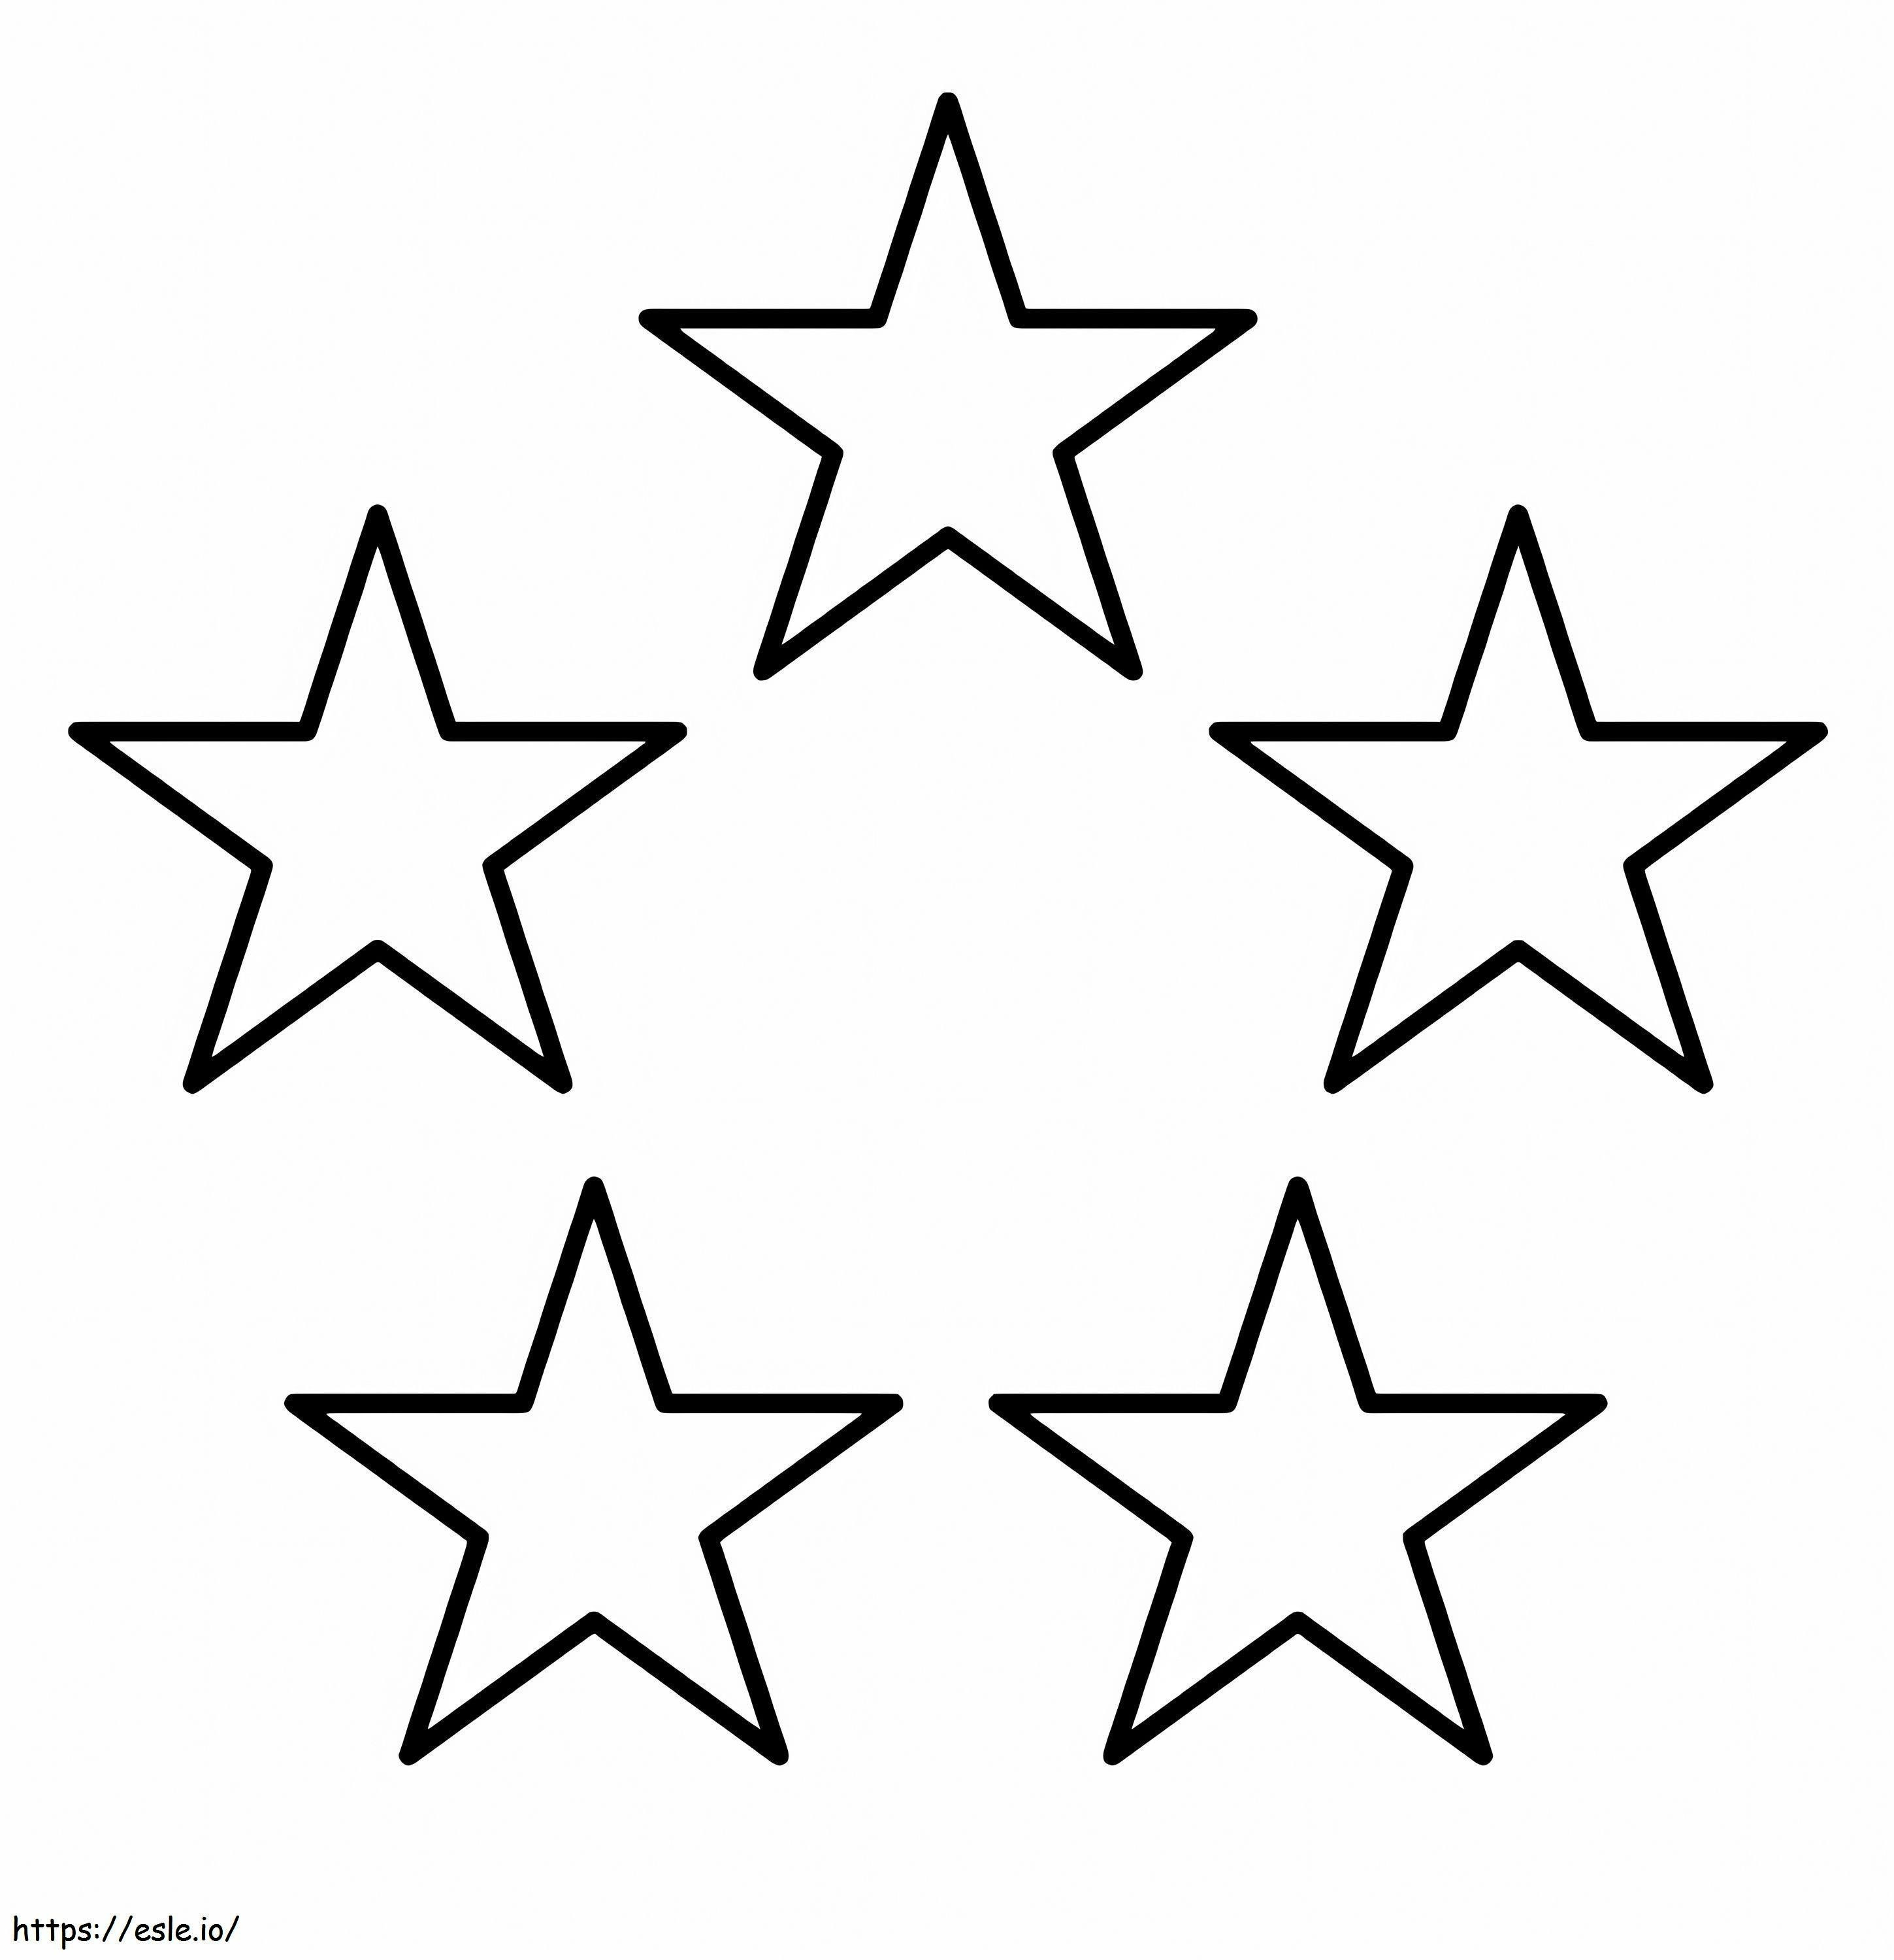 Fünf Sterne ausmalbilder